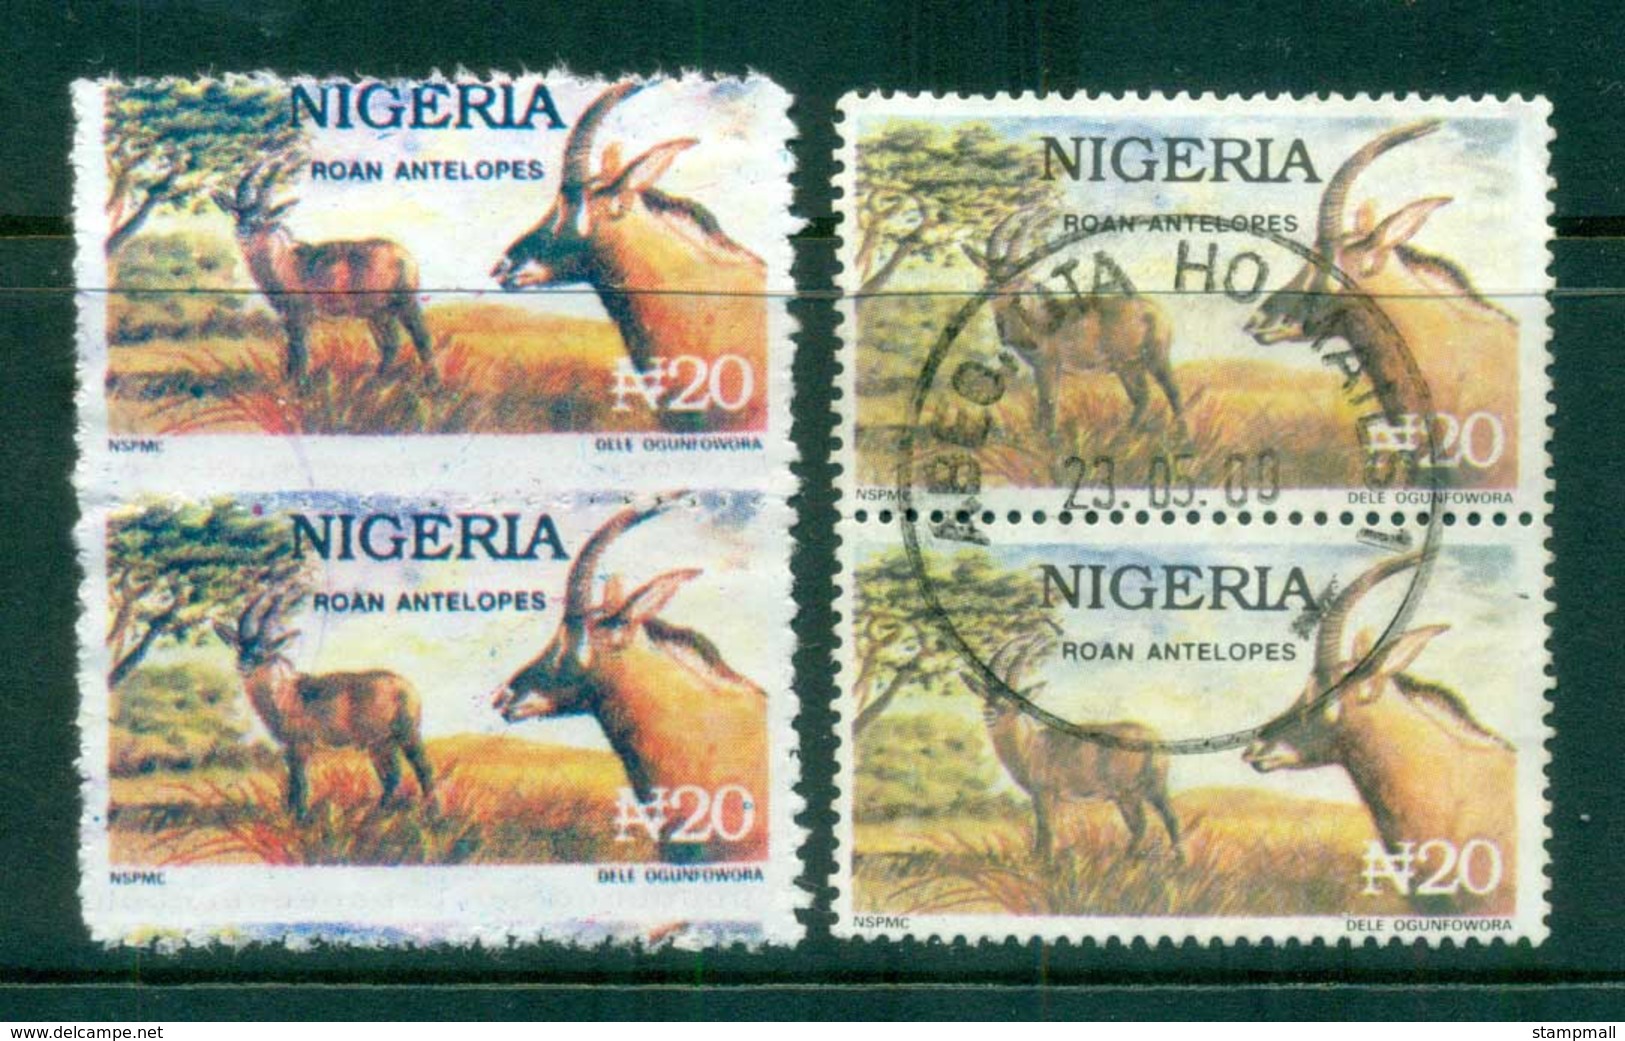 Nigeria 1992-92 Postal Forgeries, Antelope Pair With Genuine For Comparison FU - Nigeria (1961-...)